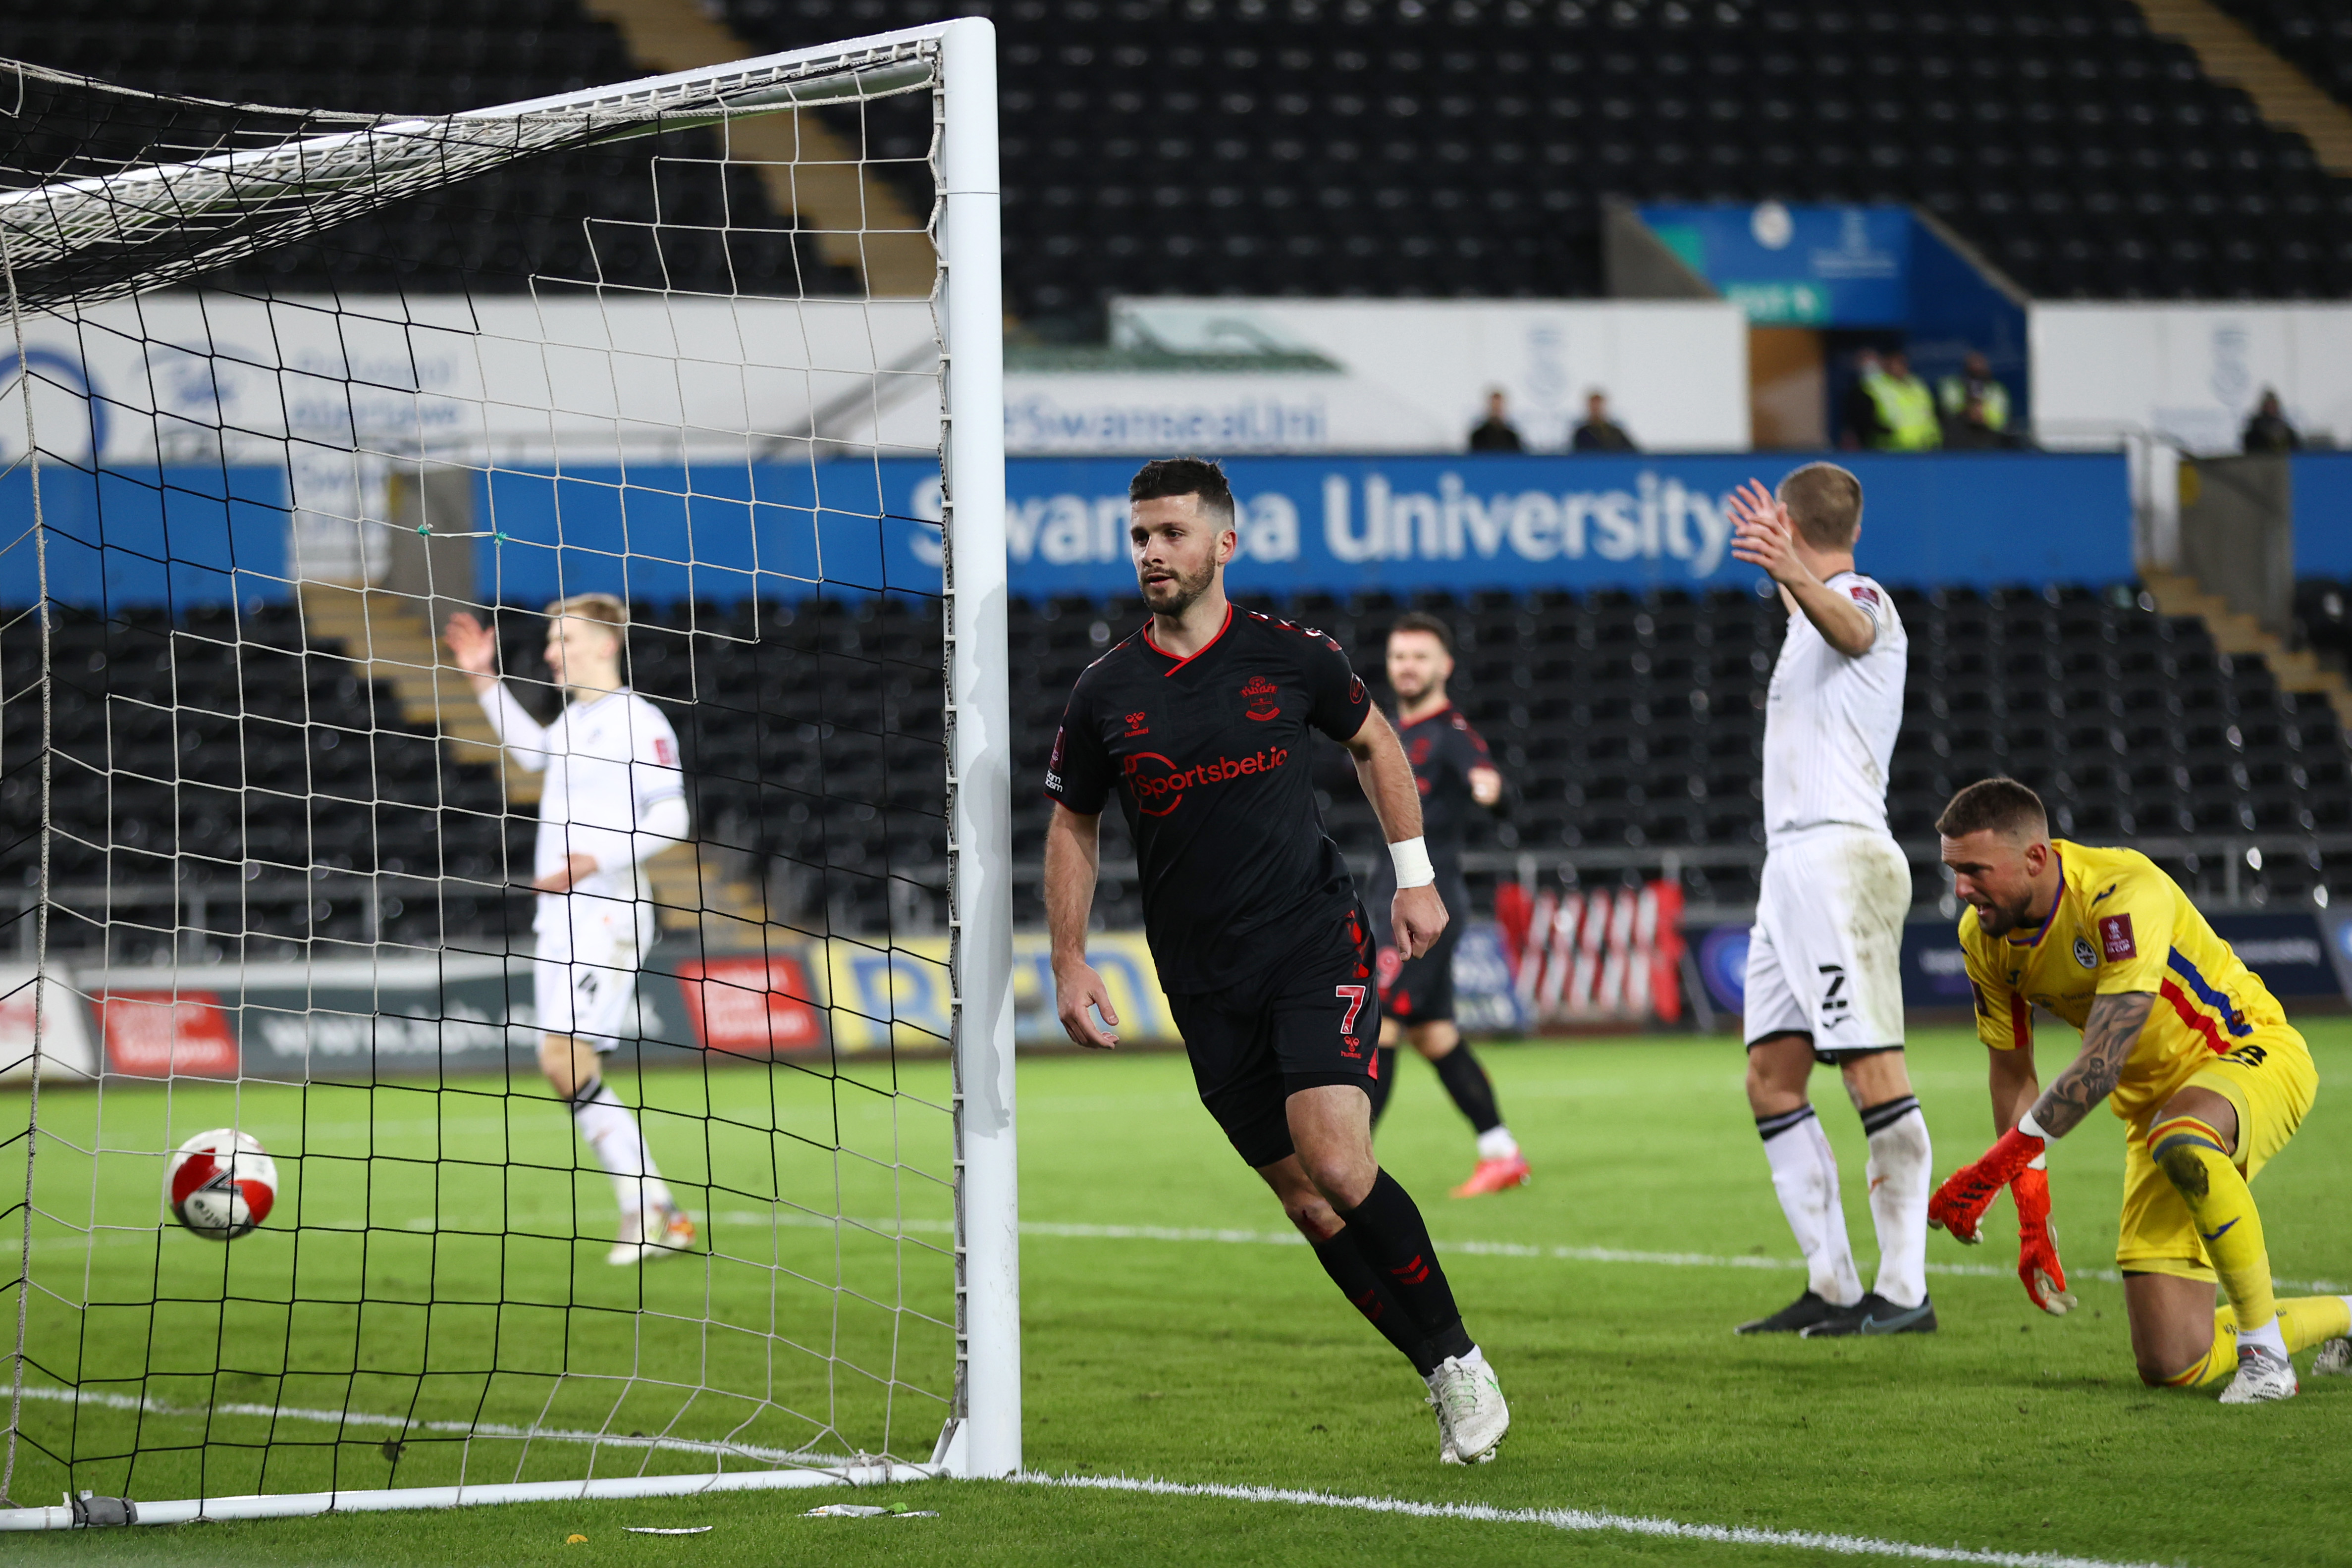 Swansea City v Southampton: The Emirates FA Cup Third Round